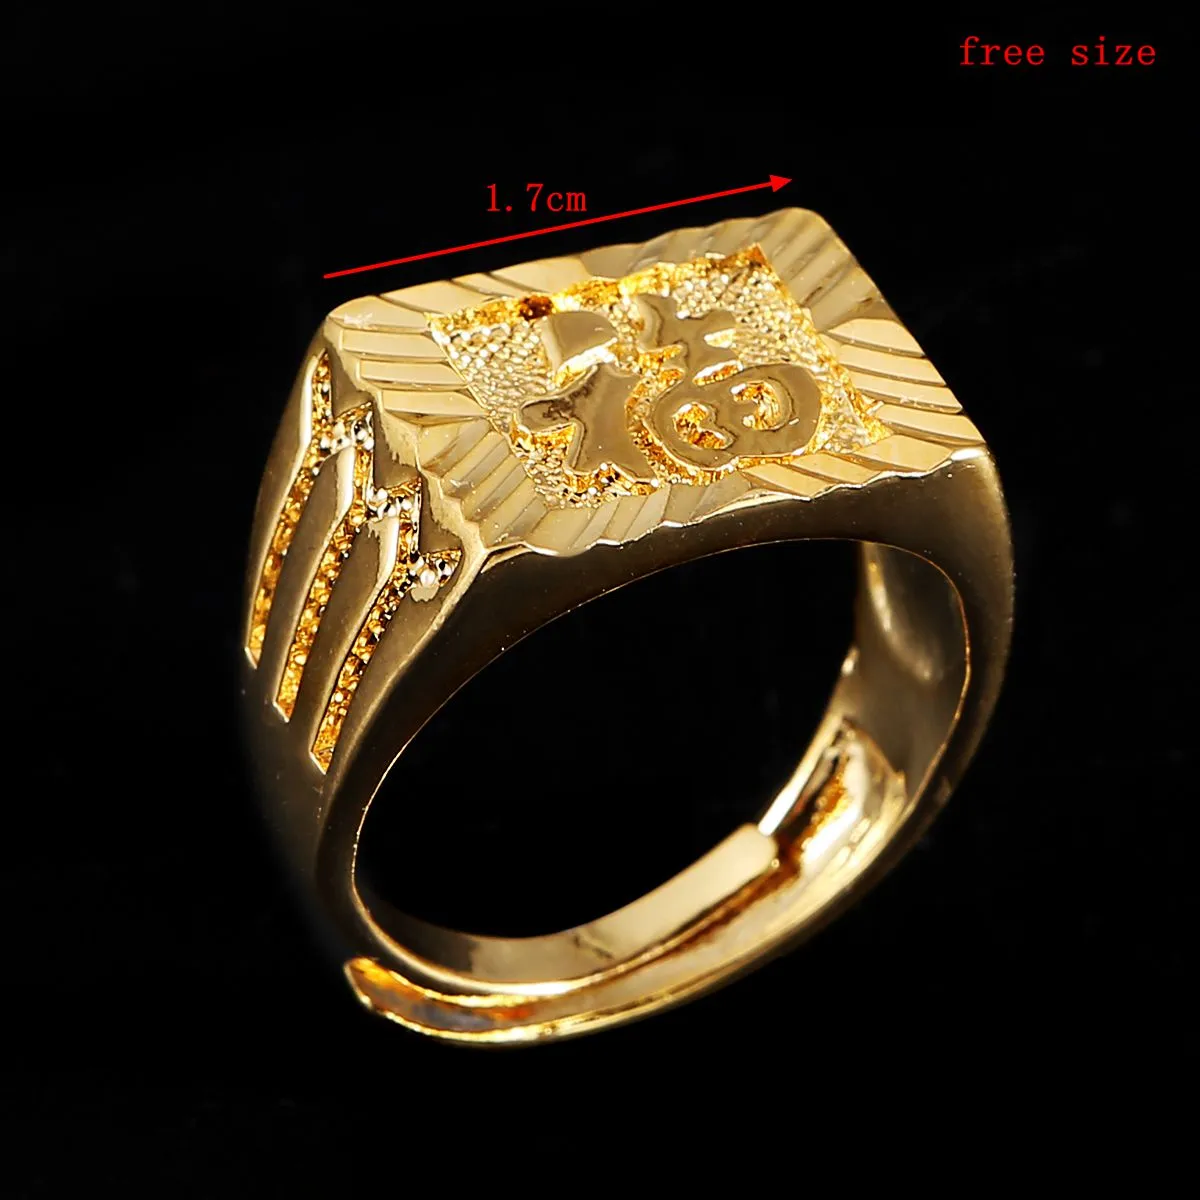 Brass and Bronze Rings | Various Designs, Set Stones - Tribu